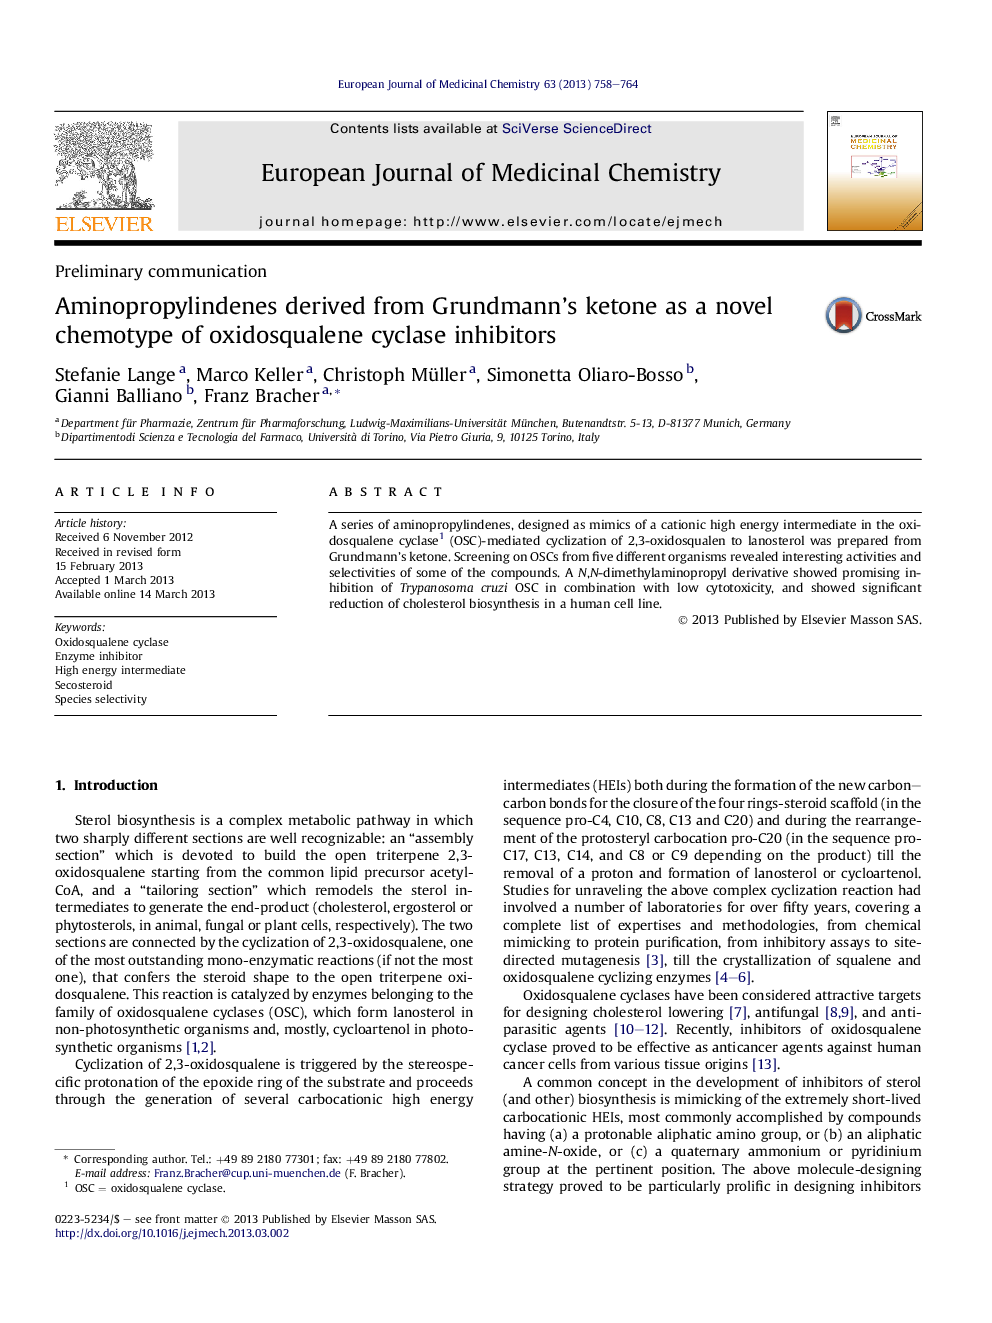 Aminopropylindenes derived from Grundmann's ketone as a novel chemotype of oxidosqualene cyclase inhibitors